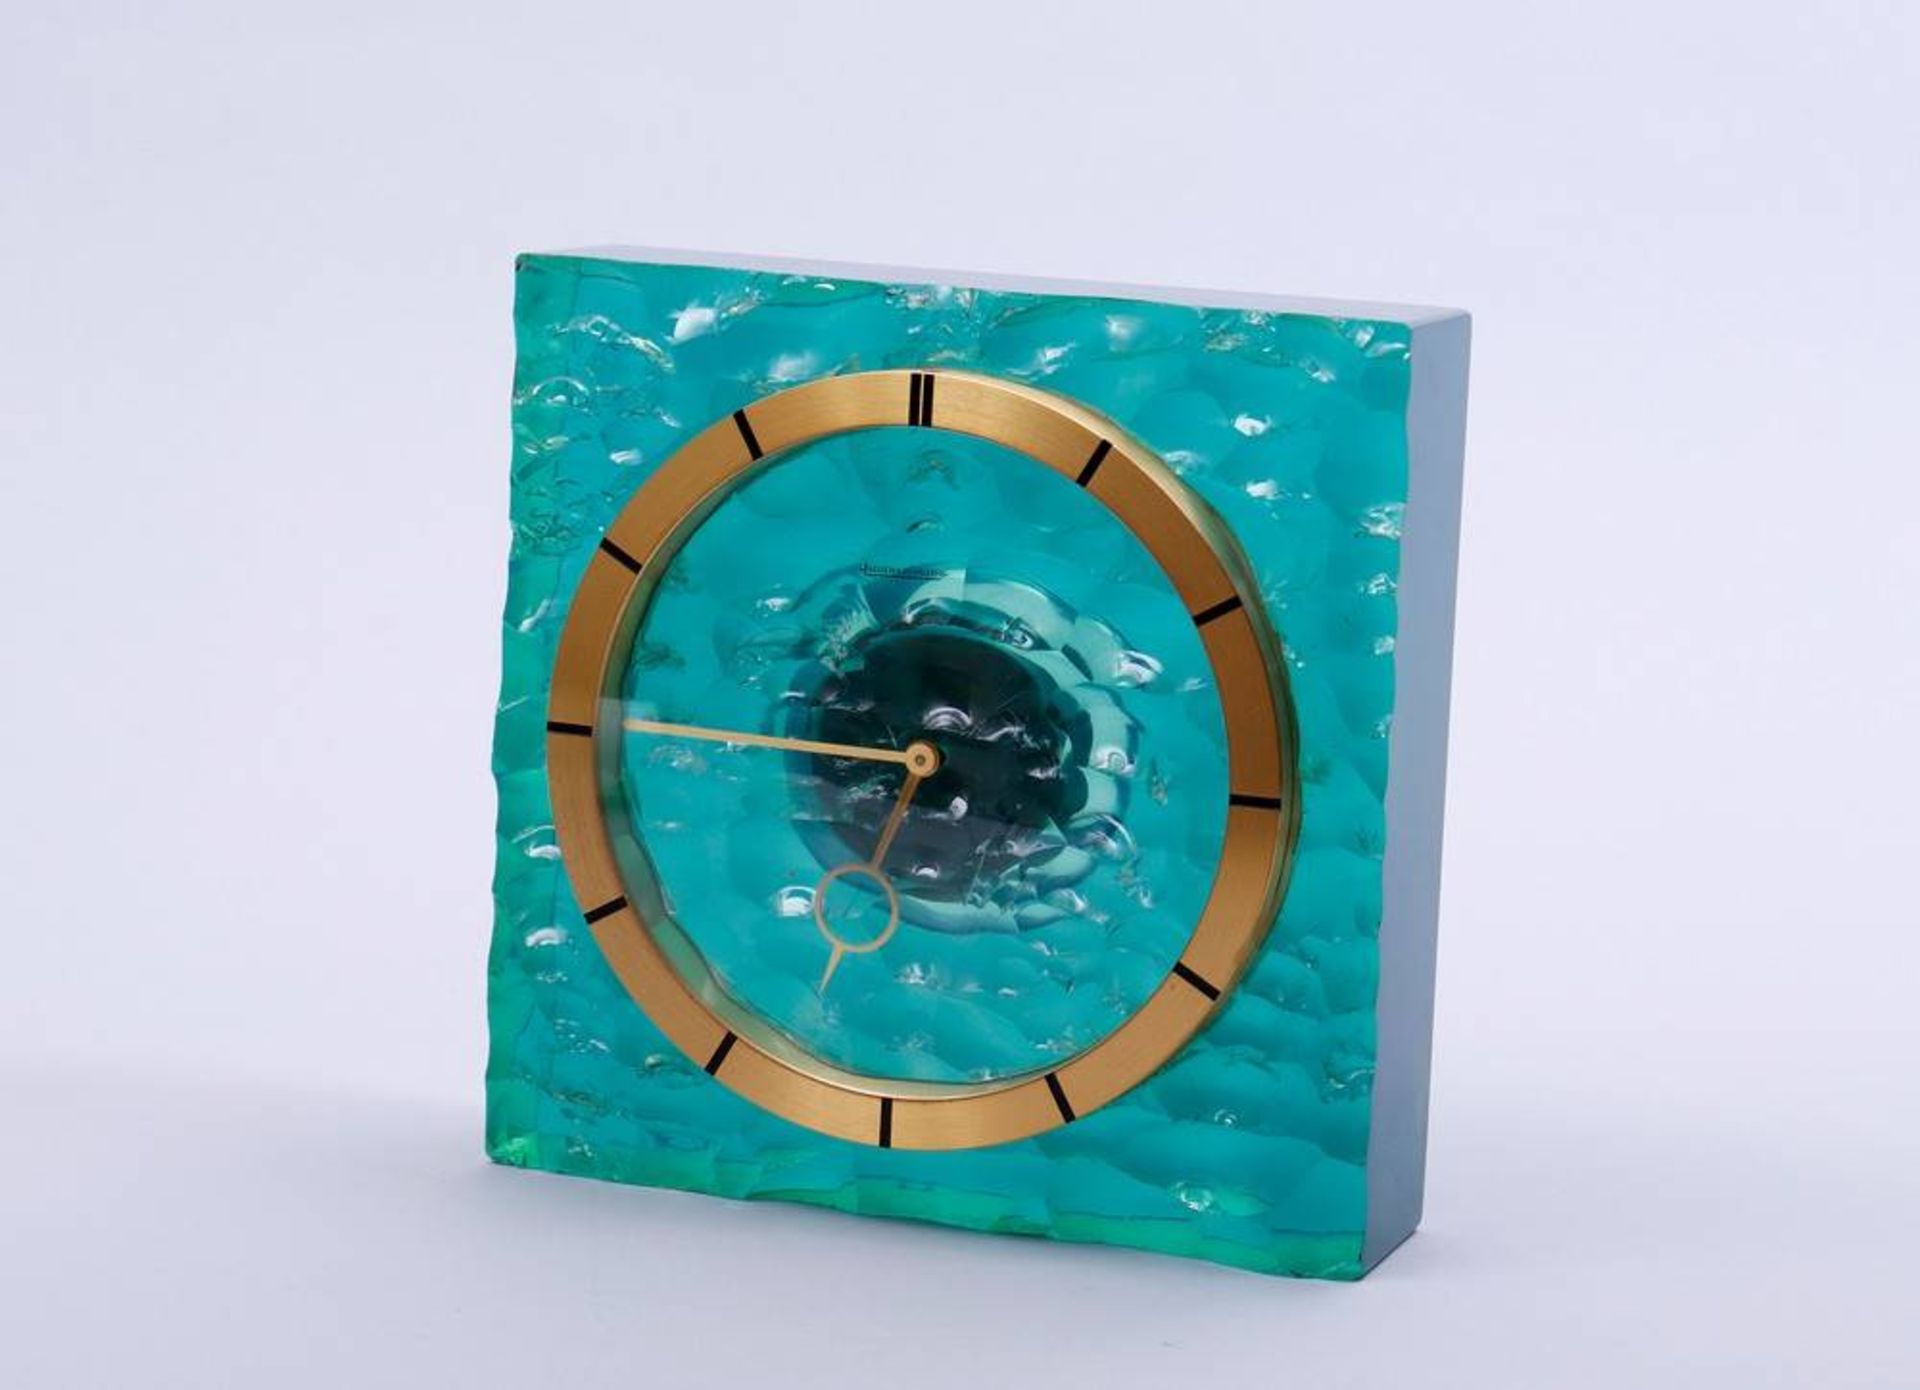 Table clock Jaeger LeCoultre, 1970s, model "Quader de Acryl", 8 day movement, green pespex case,